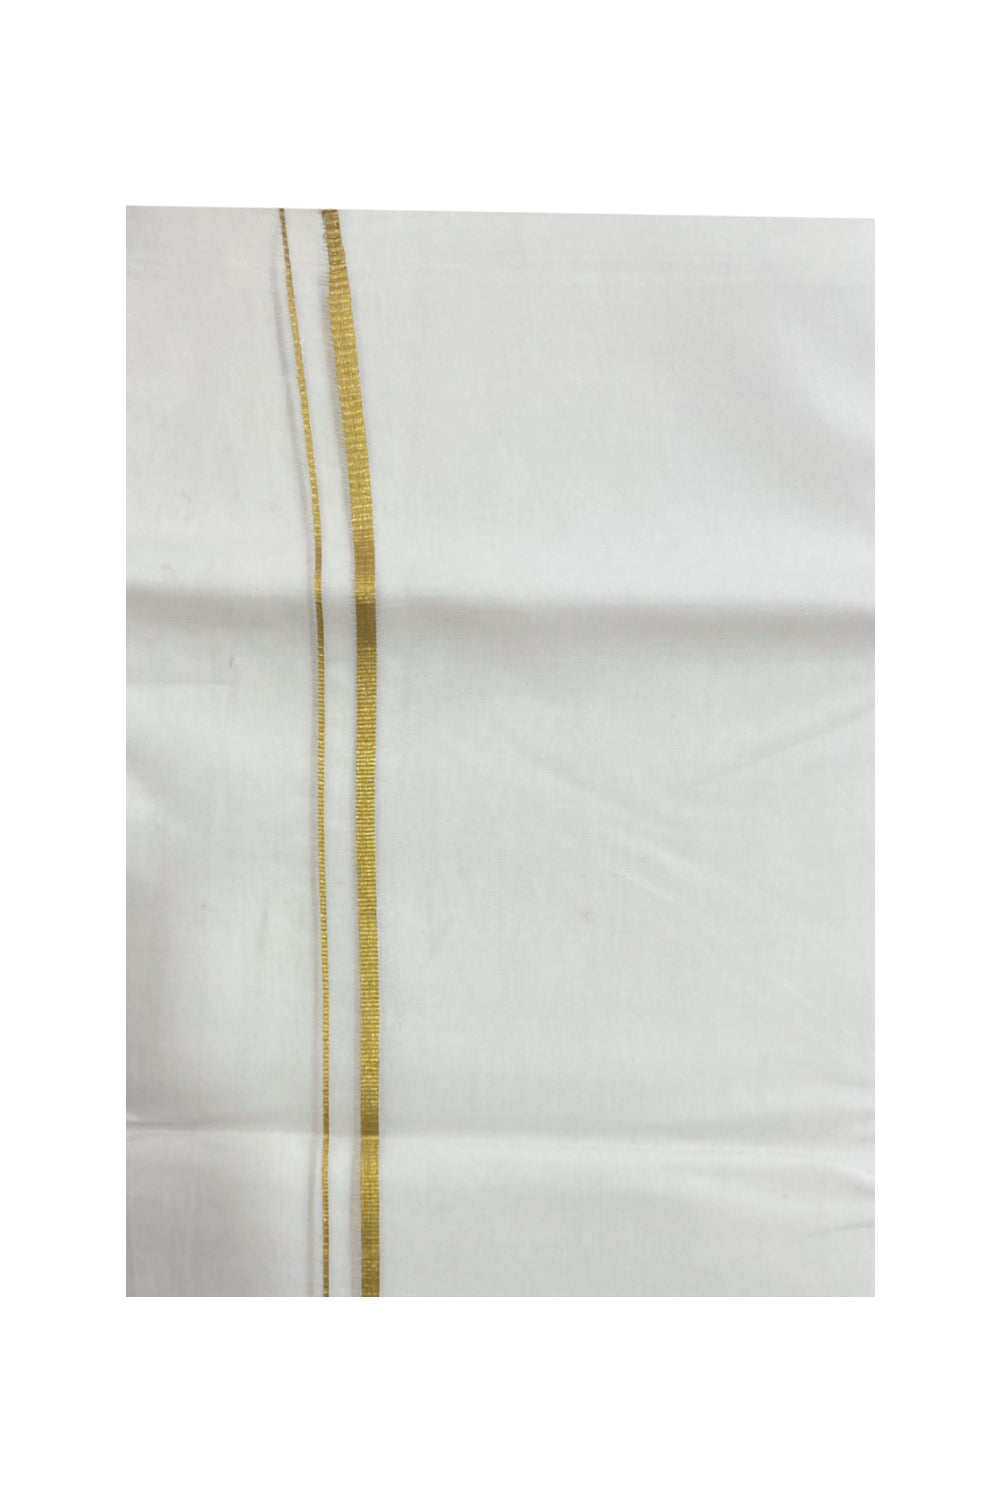 Pure White Cotton Double Mundu with Kasavu Line Border (South Indian Dhoti)